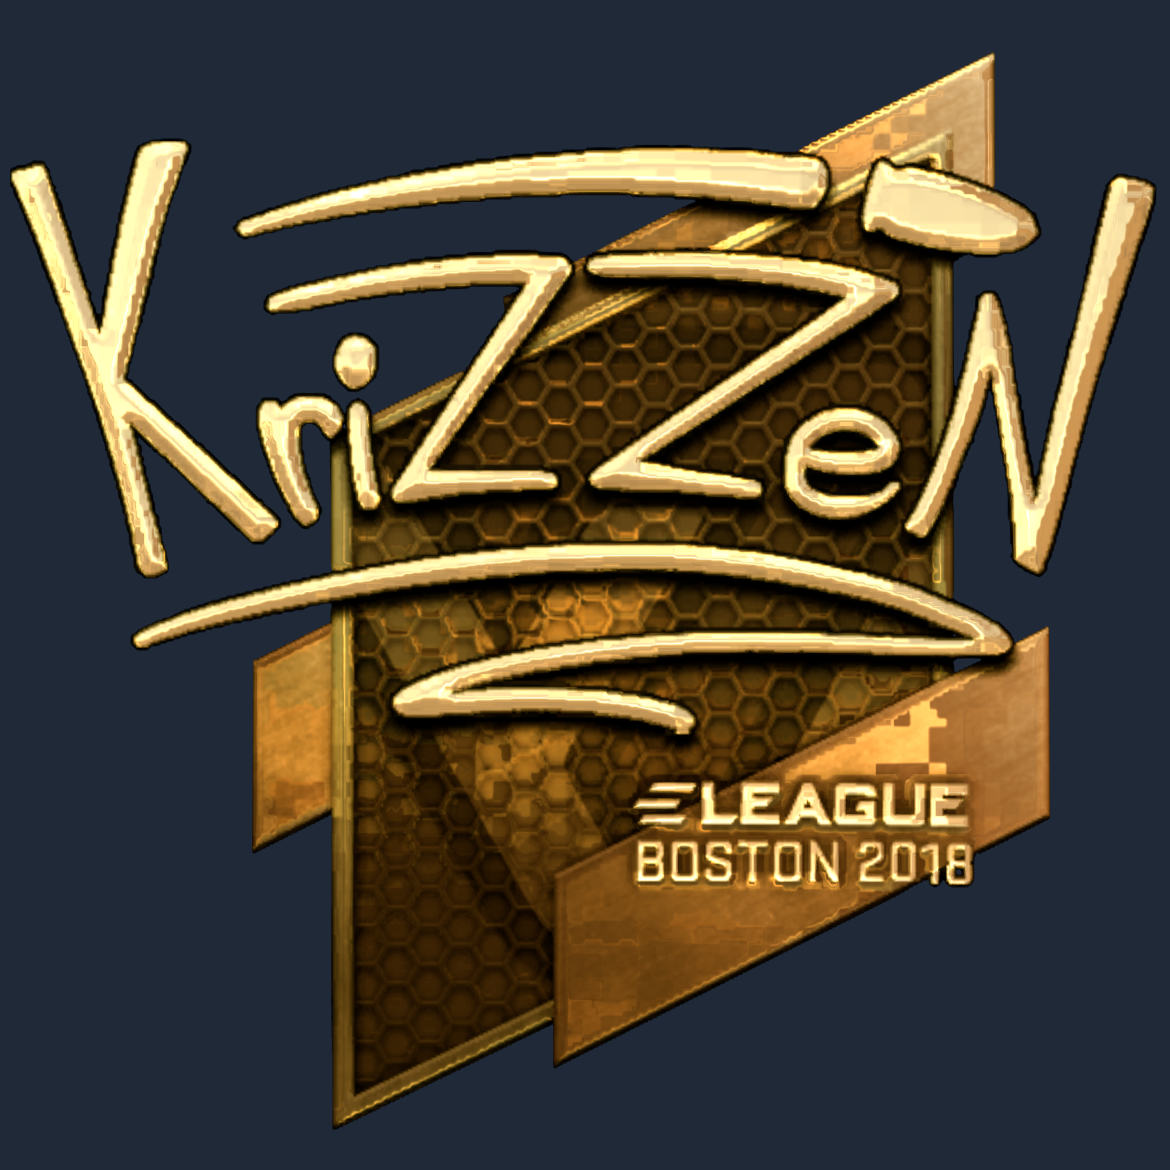 Sticker | KrizzeN (Gold) | Boston 2018 Screenshot